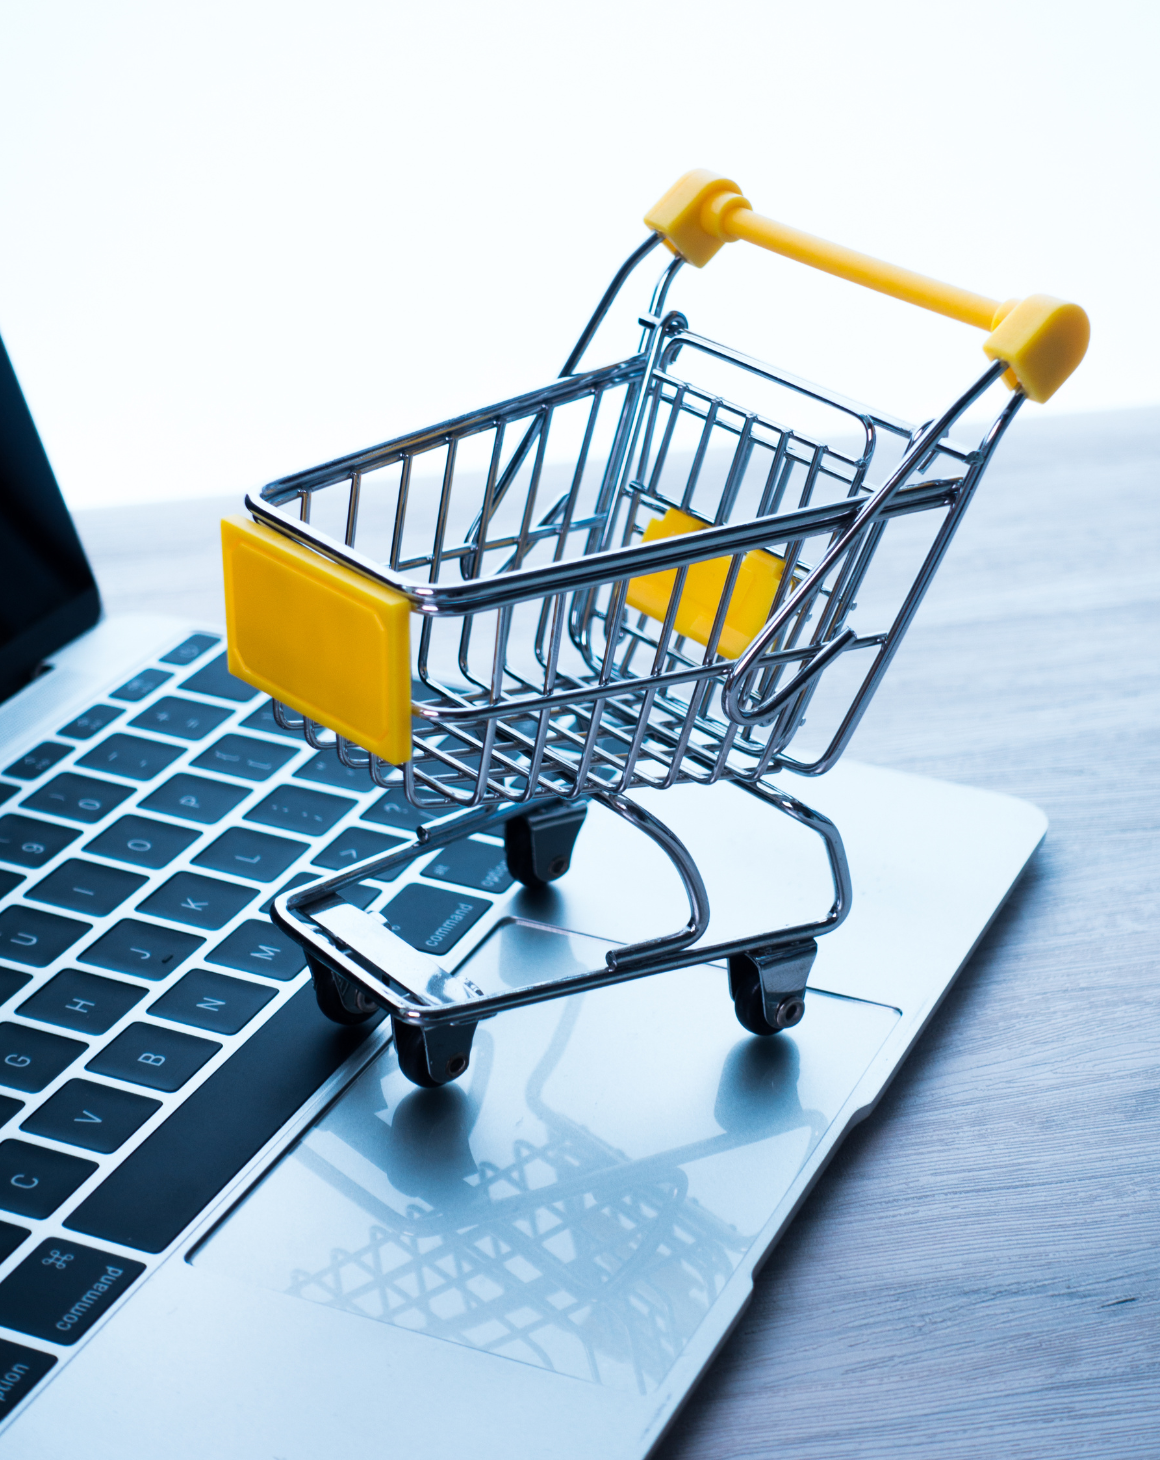 A shopping cart on a laptop